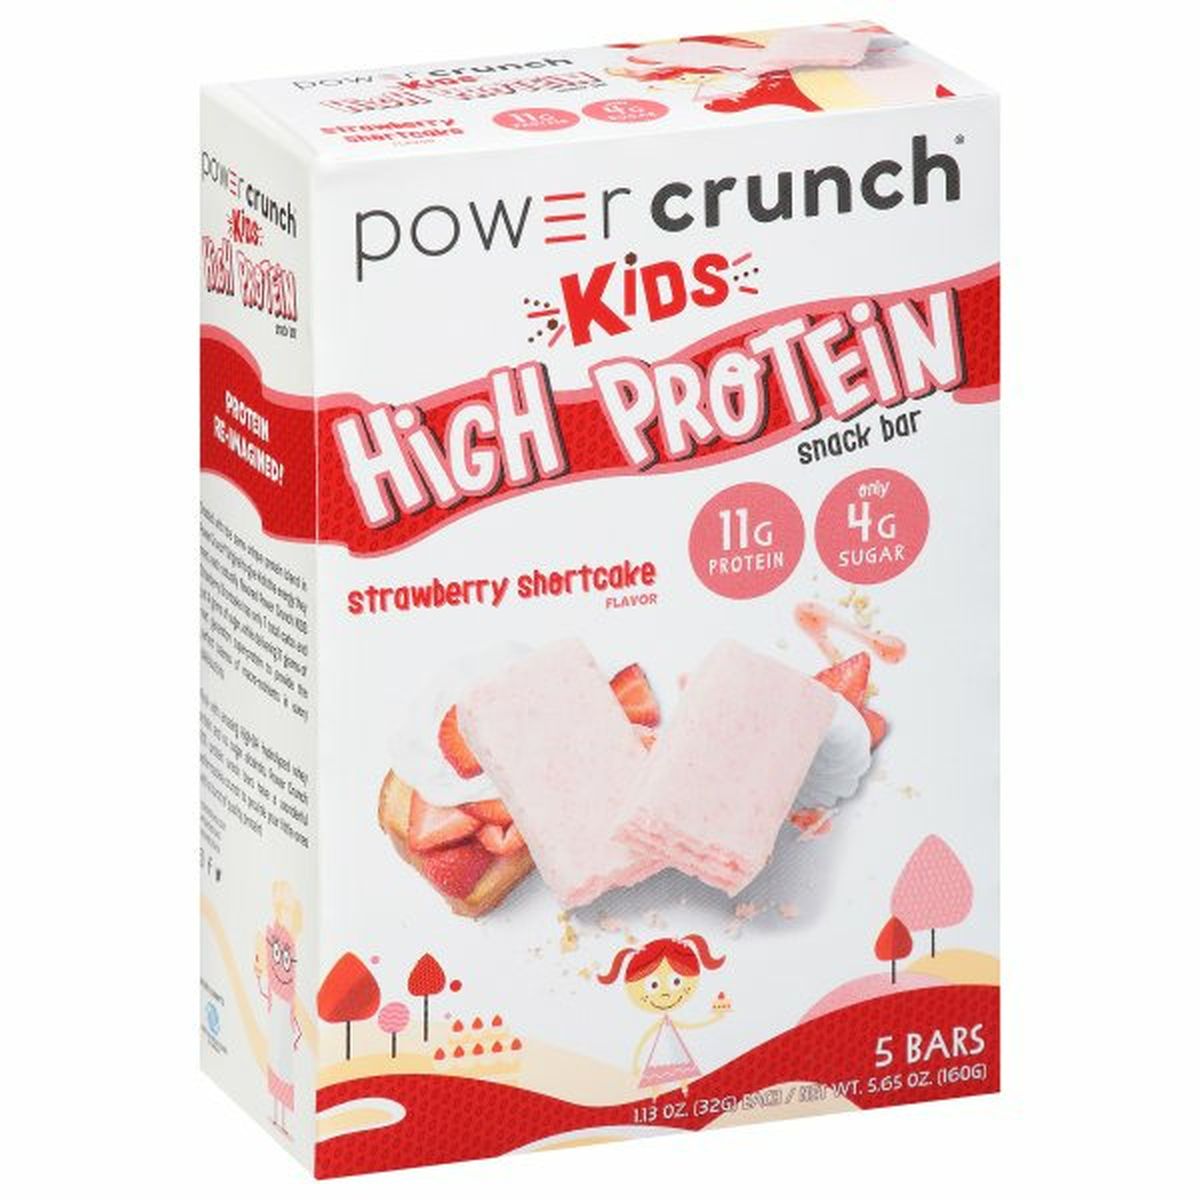 Calories in Power Crunch Snack Bar, High Protein, Strawberry Shortcake Flavor, Kids